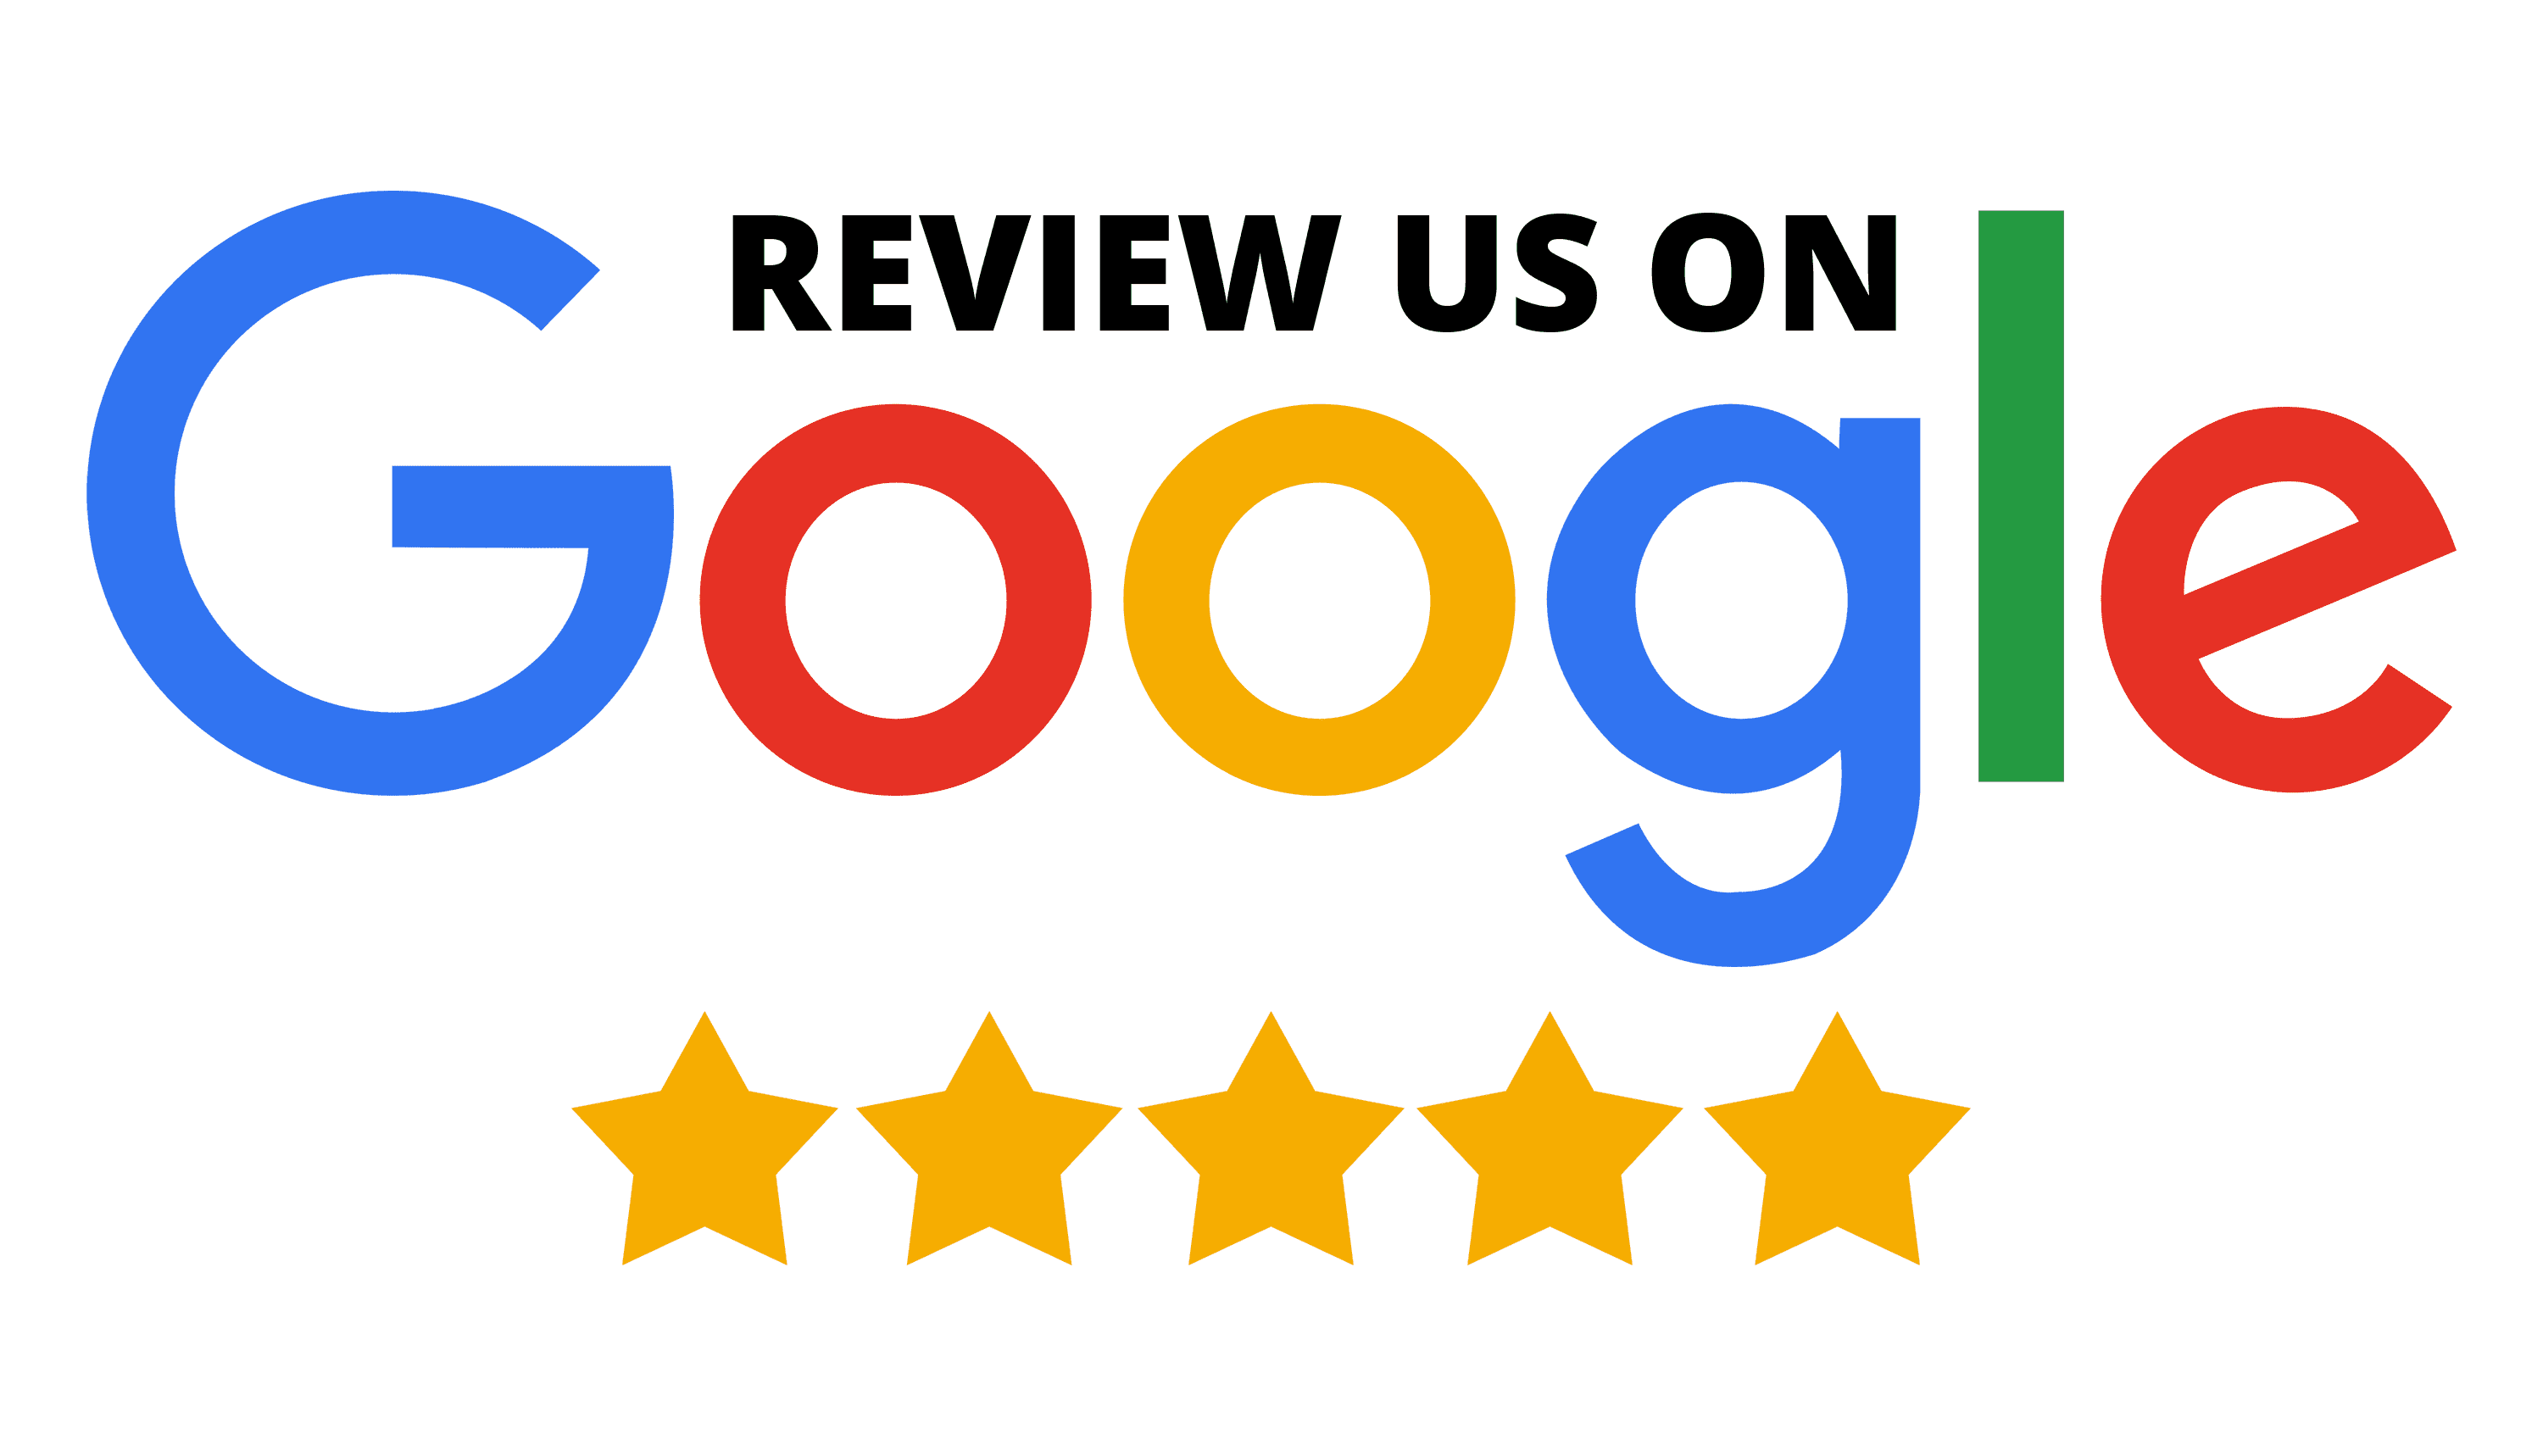 Review us on GoogleGoogle Review